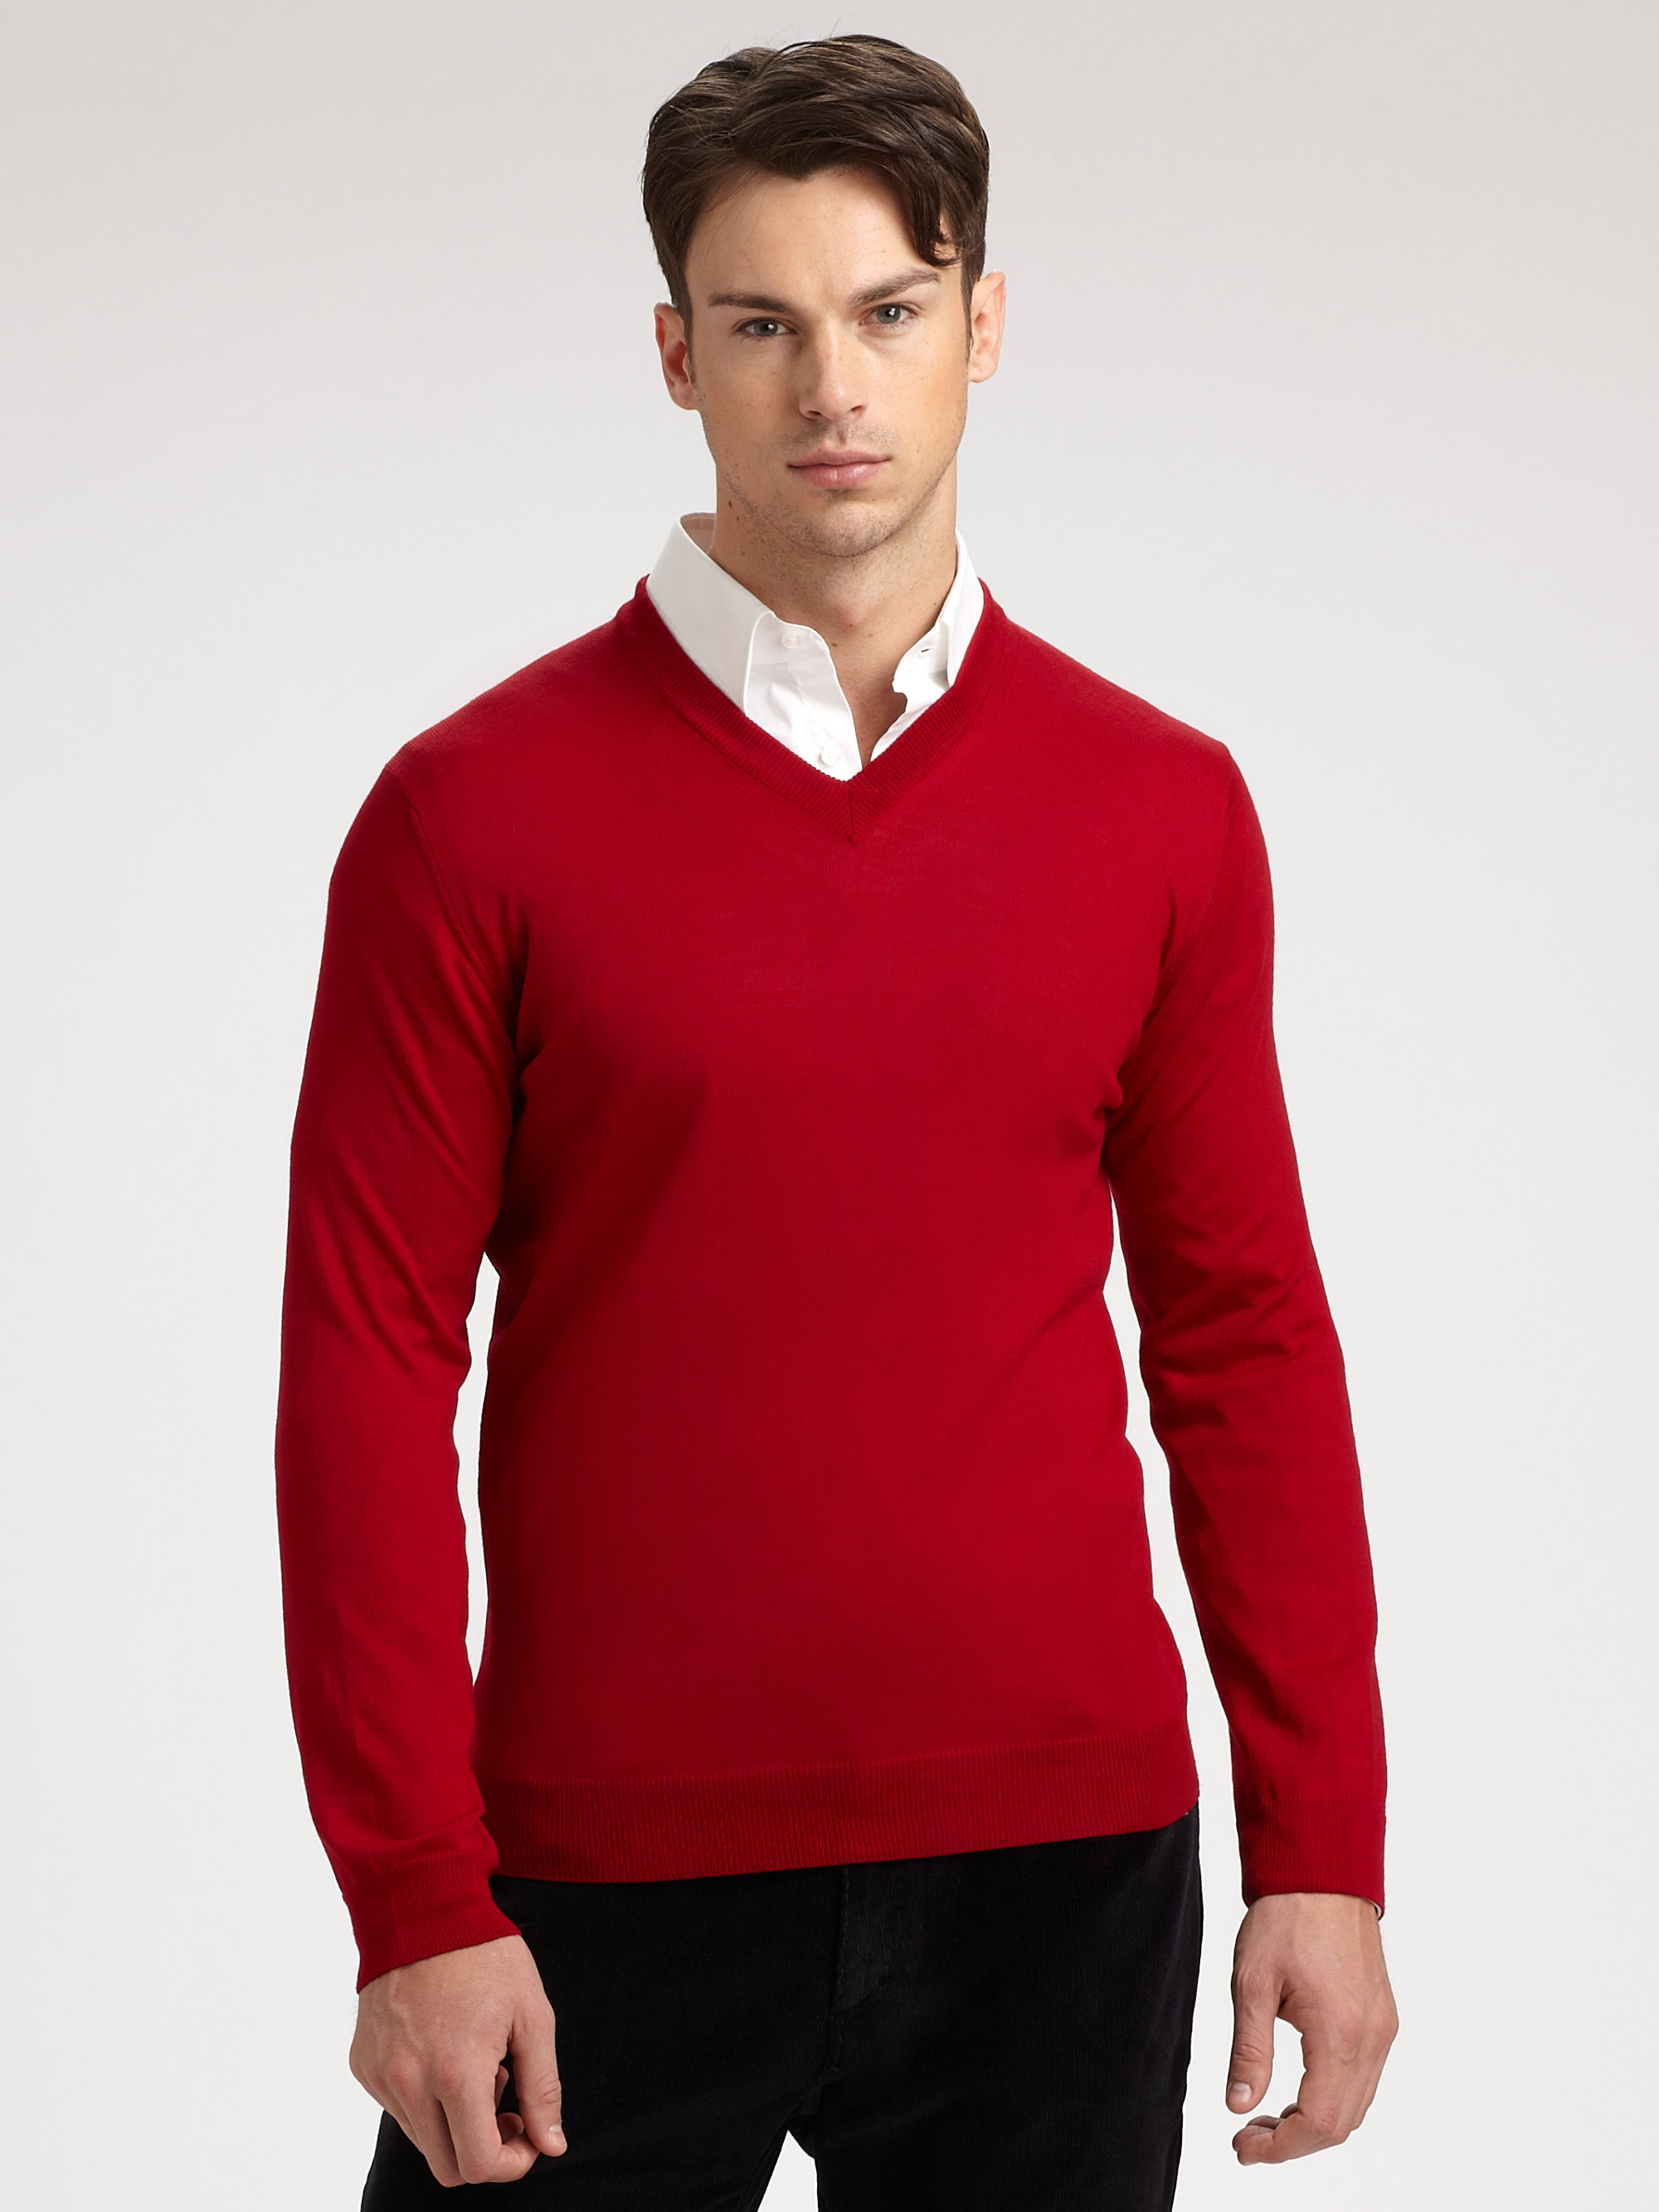 Lyst - Saks fifth avenue Merino Wool Sweater in Red for Men